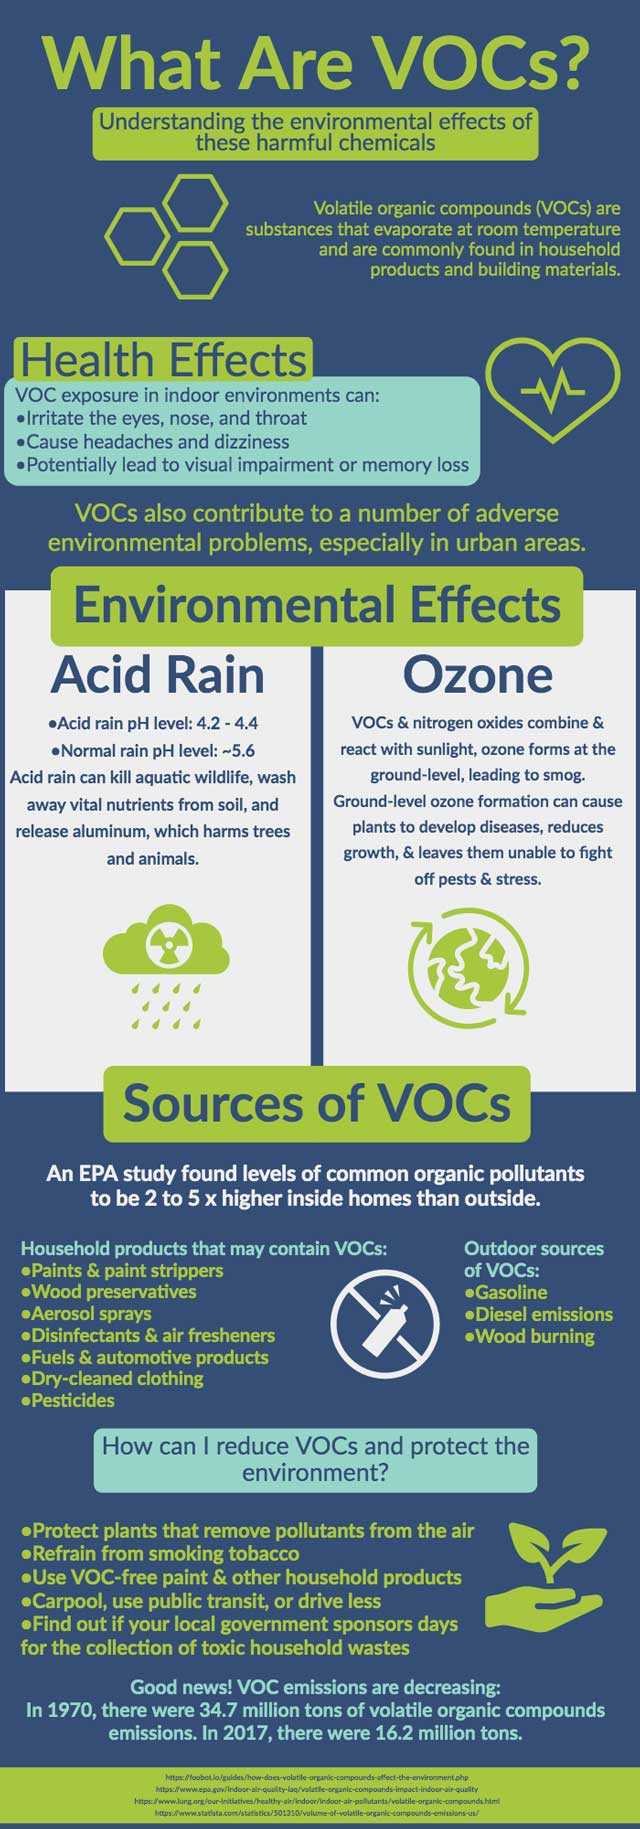 What Are VOCs, Health Effects of VOCs, Environmental Effects of VOCs, Sources of VOCs, Reducing VOCs, ECOS Paints